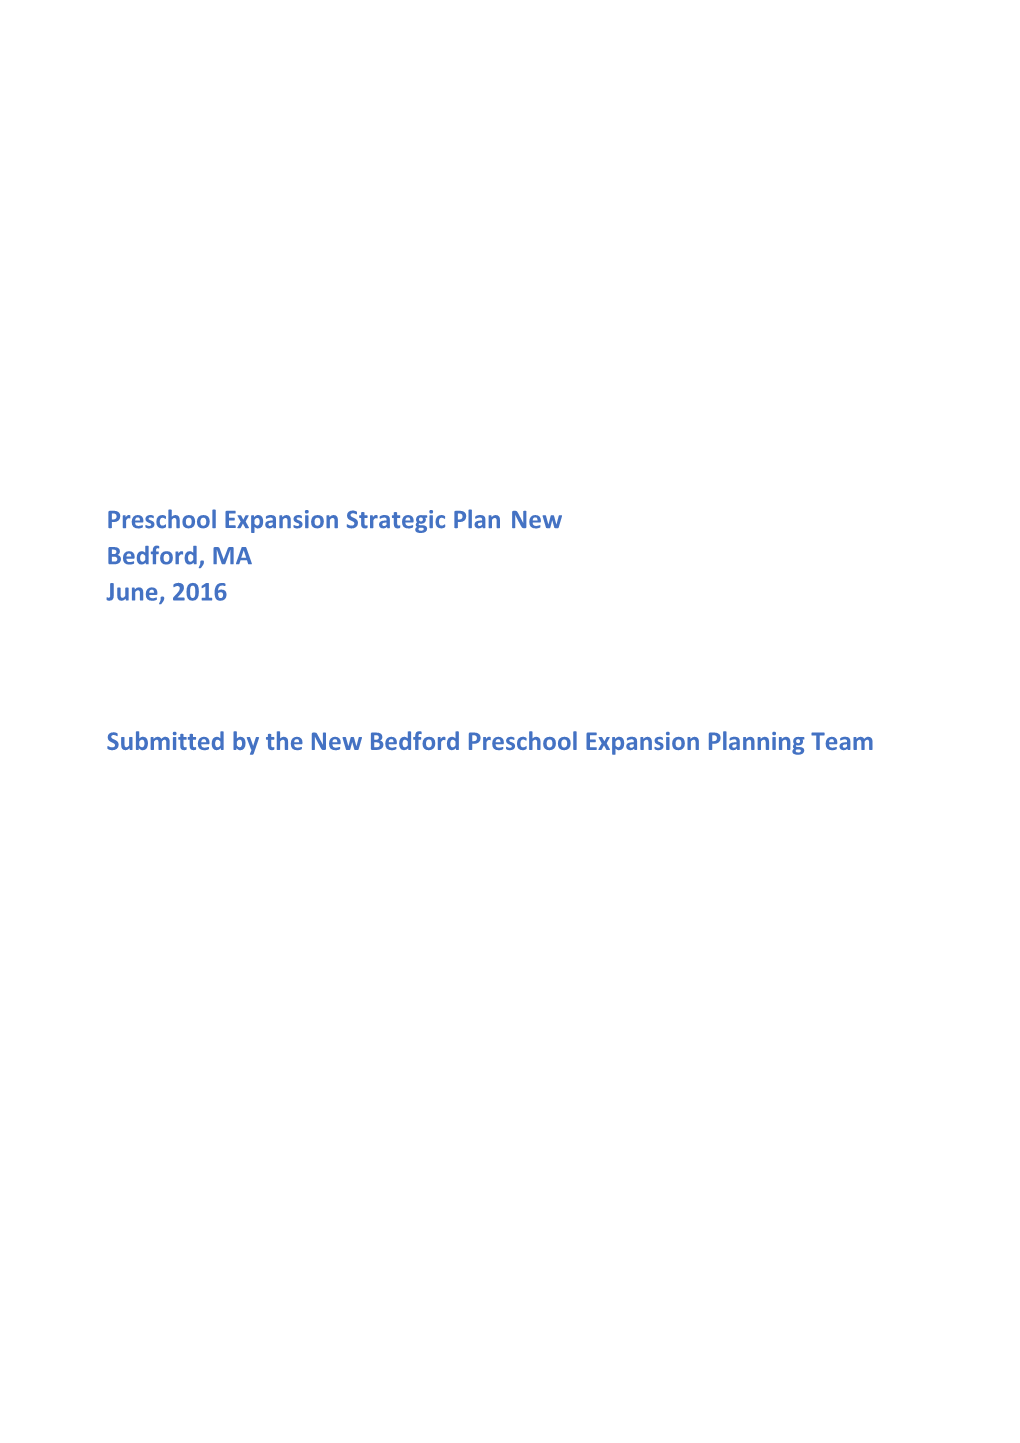 Preschool Expansion Strategic Plan New Bedford, MA